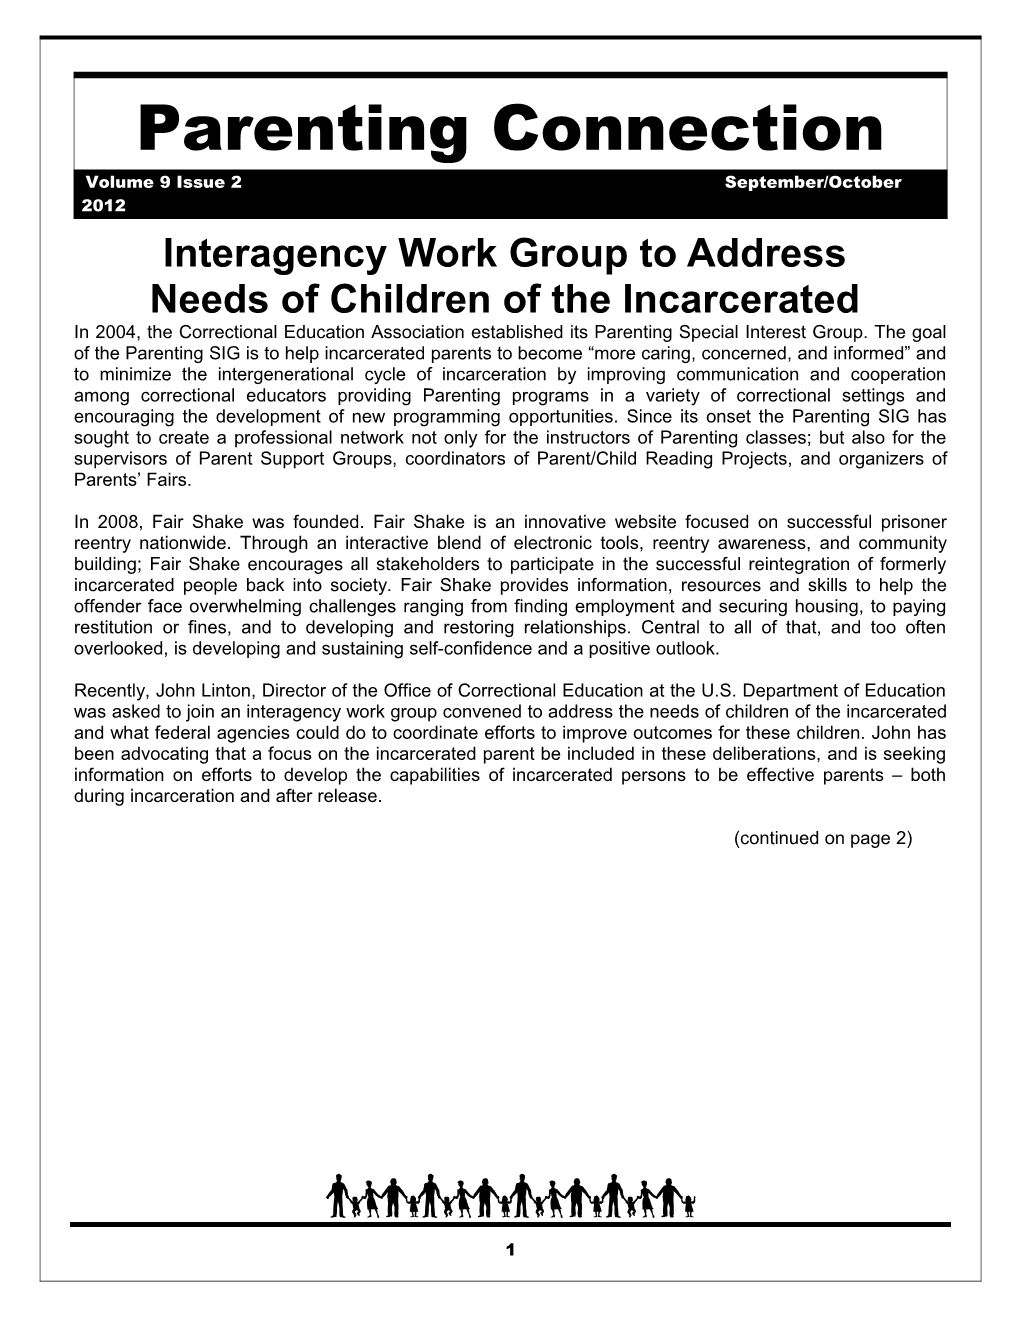 Interagency Work Group to Address